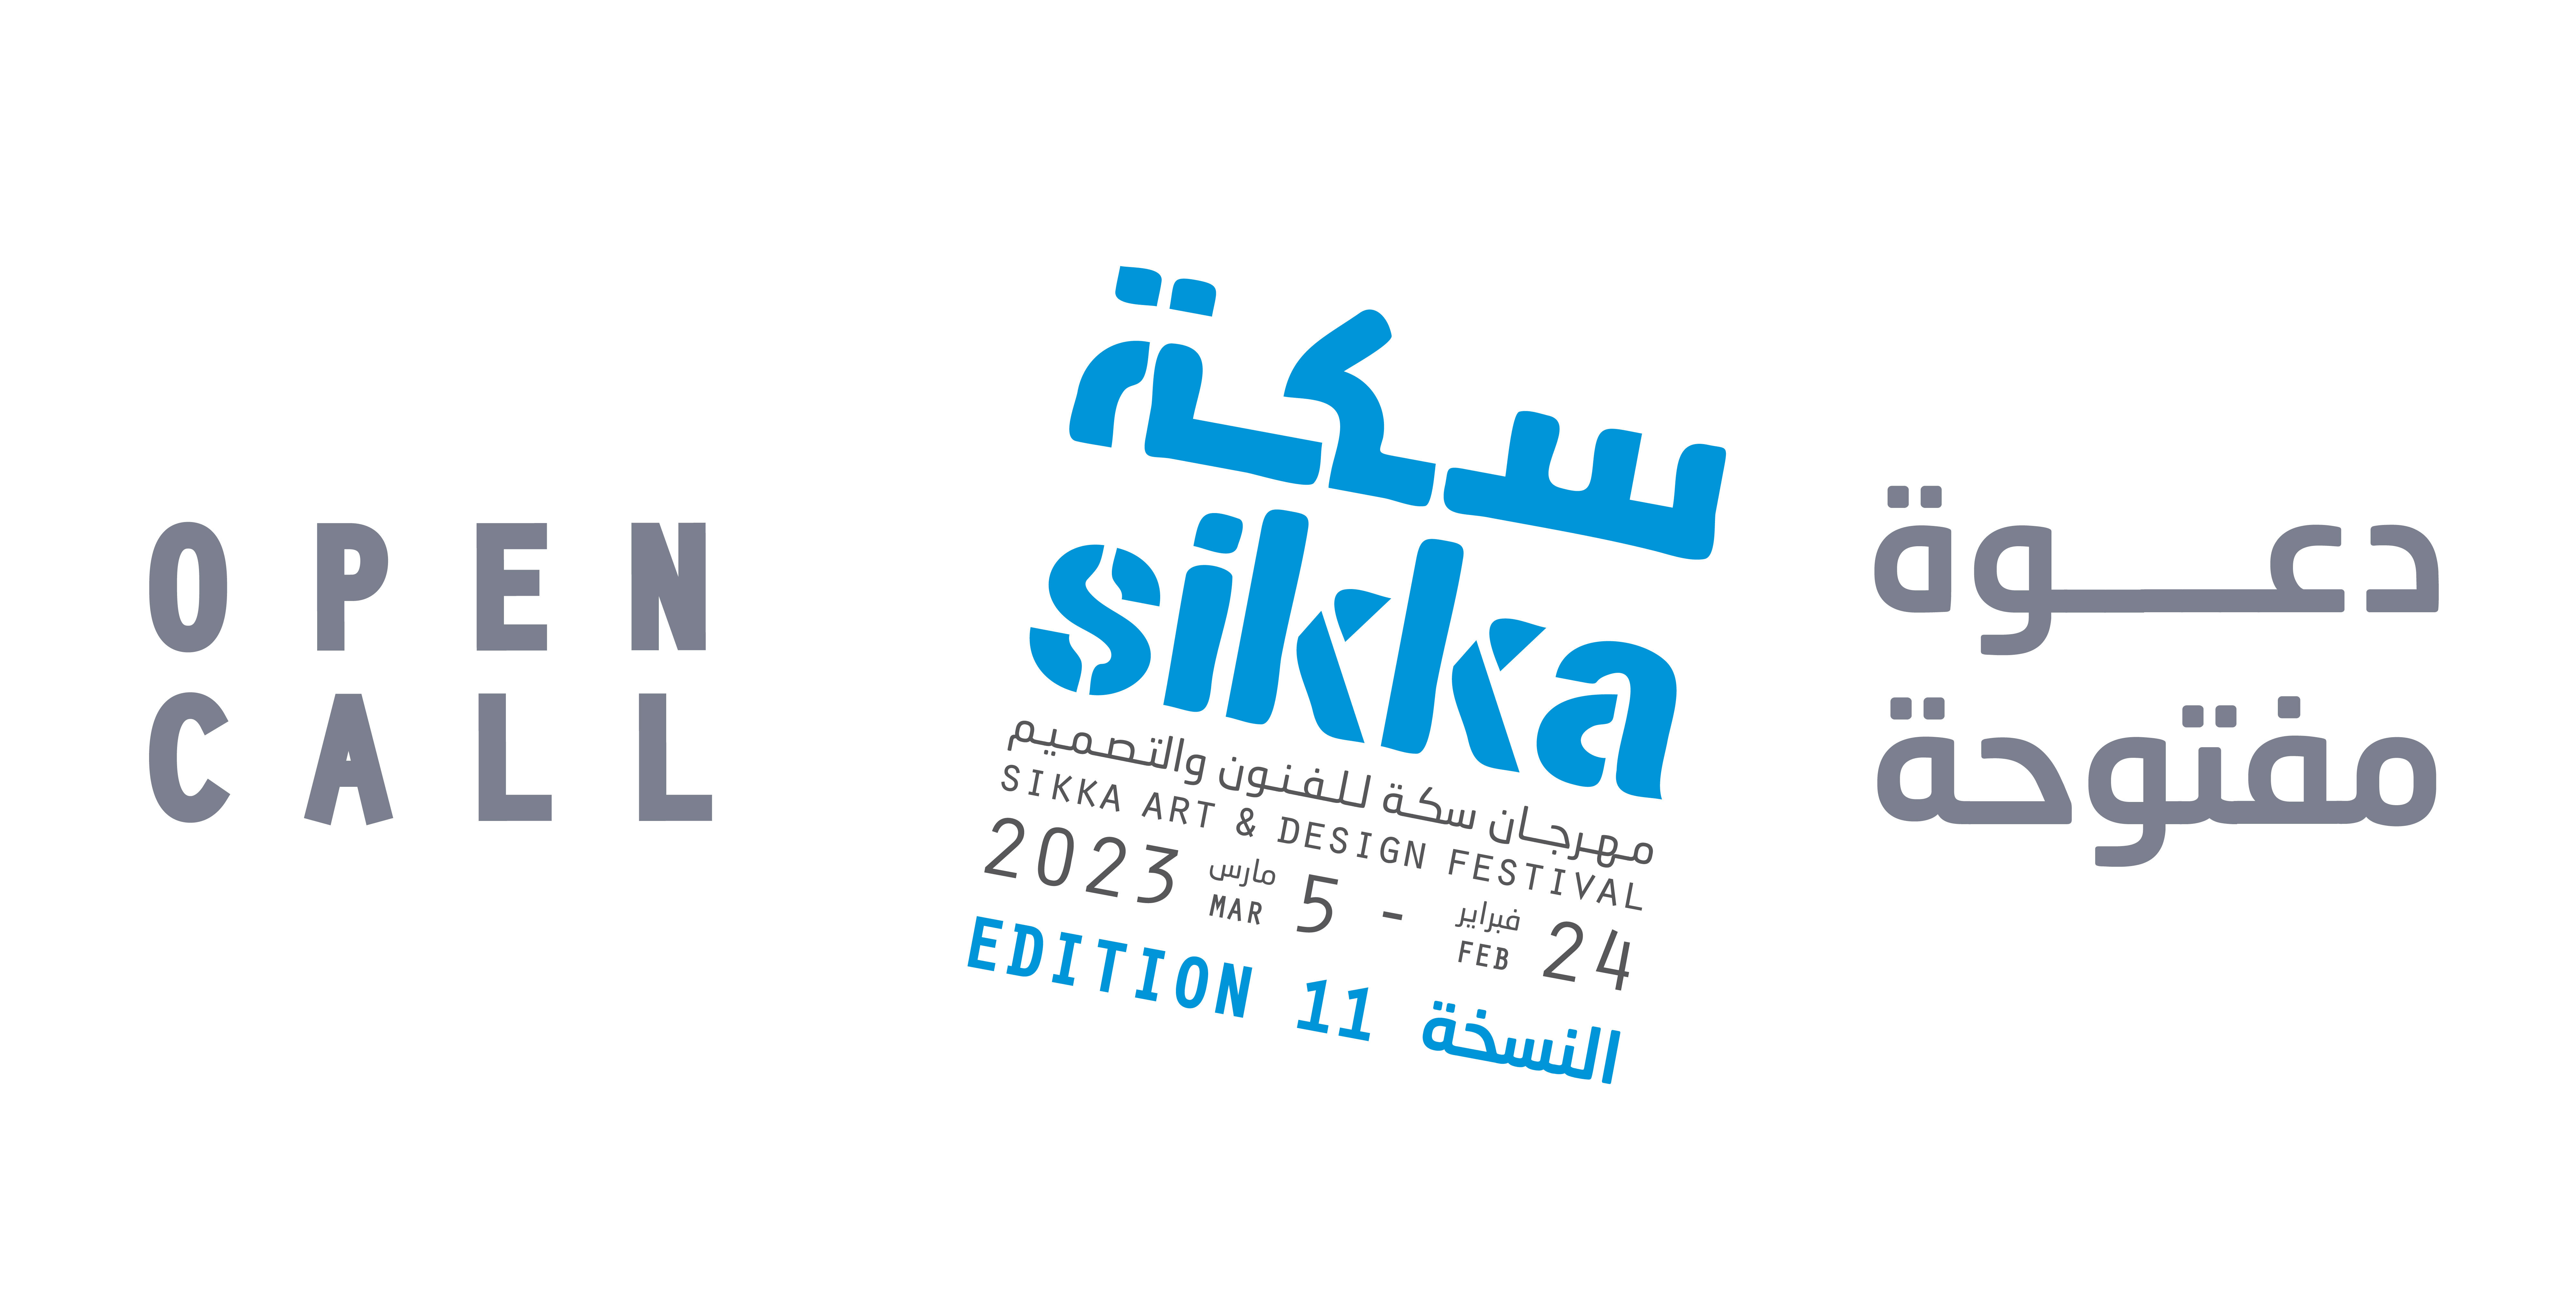 Dubai Design Week 2023 Open Call